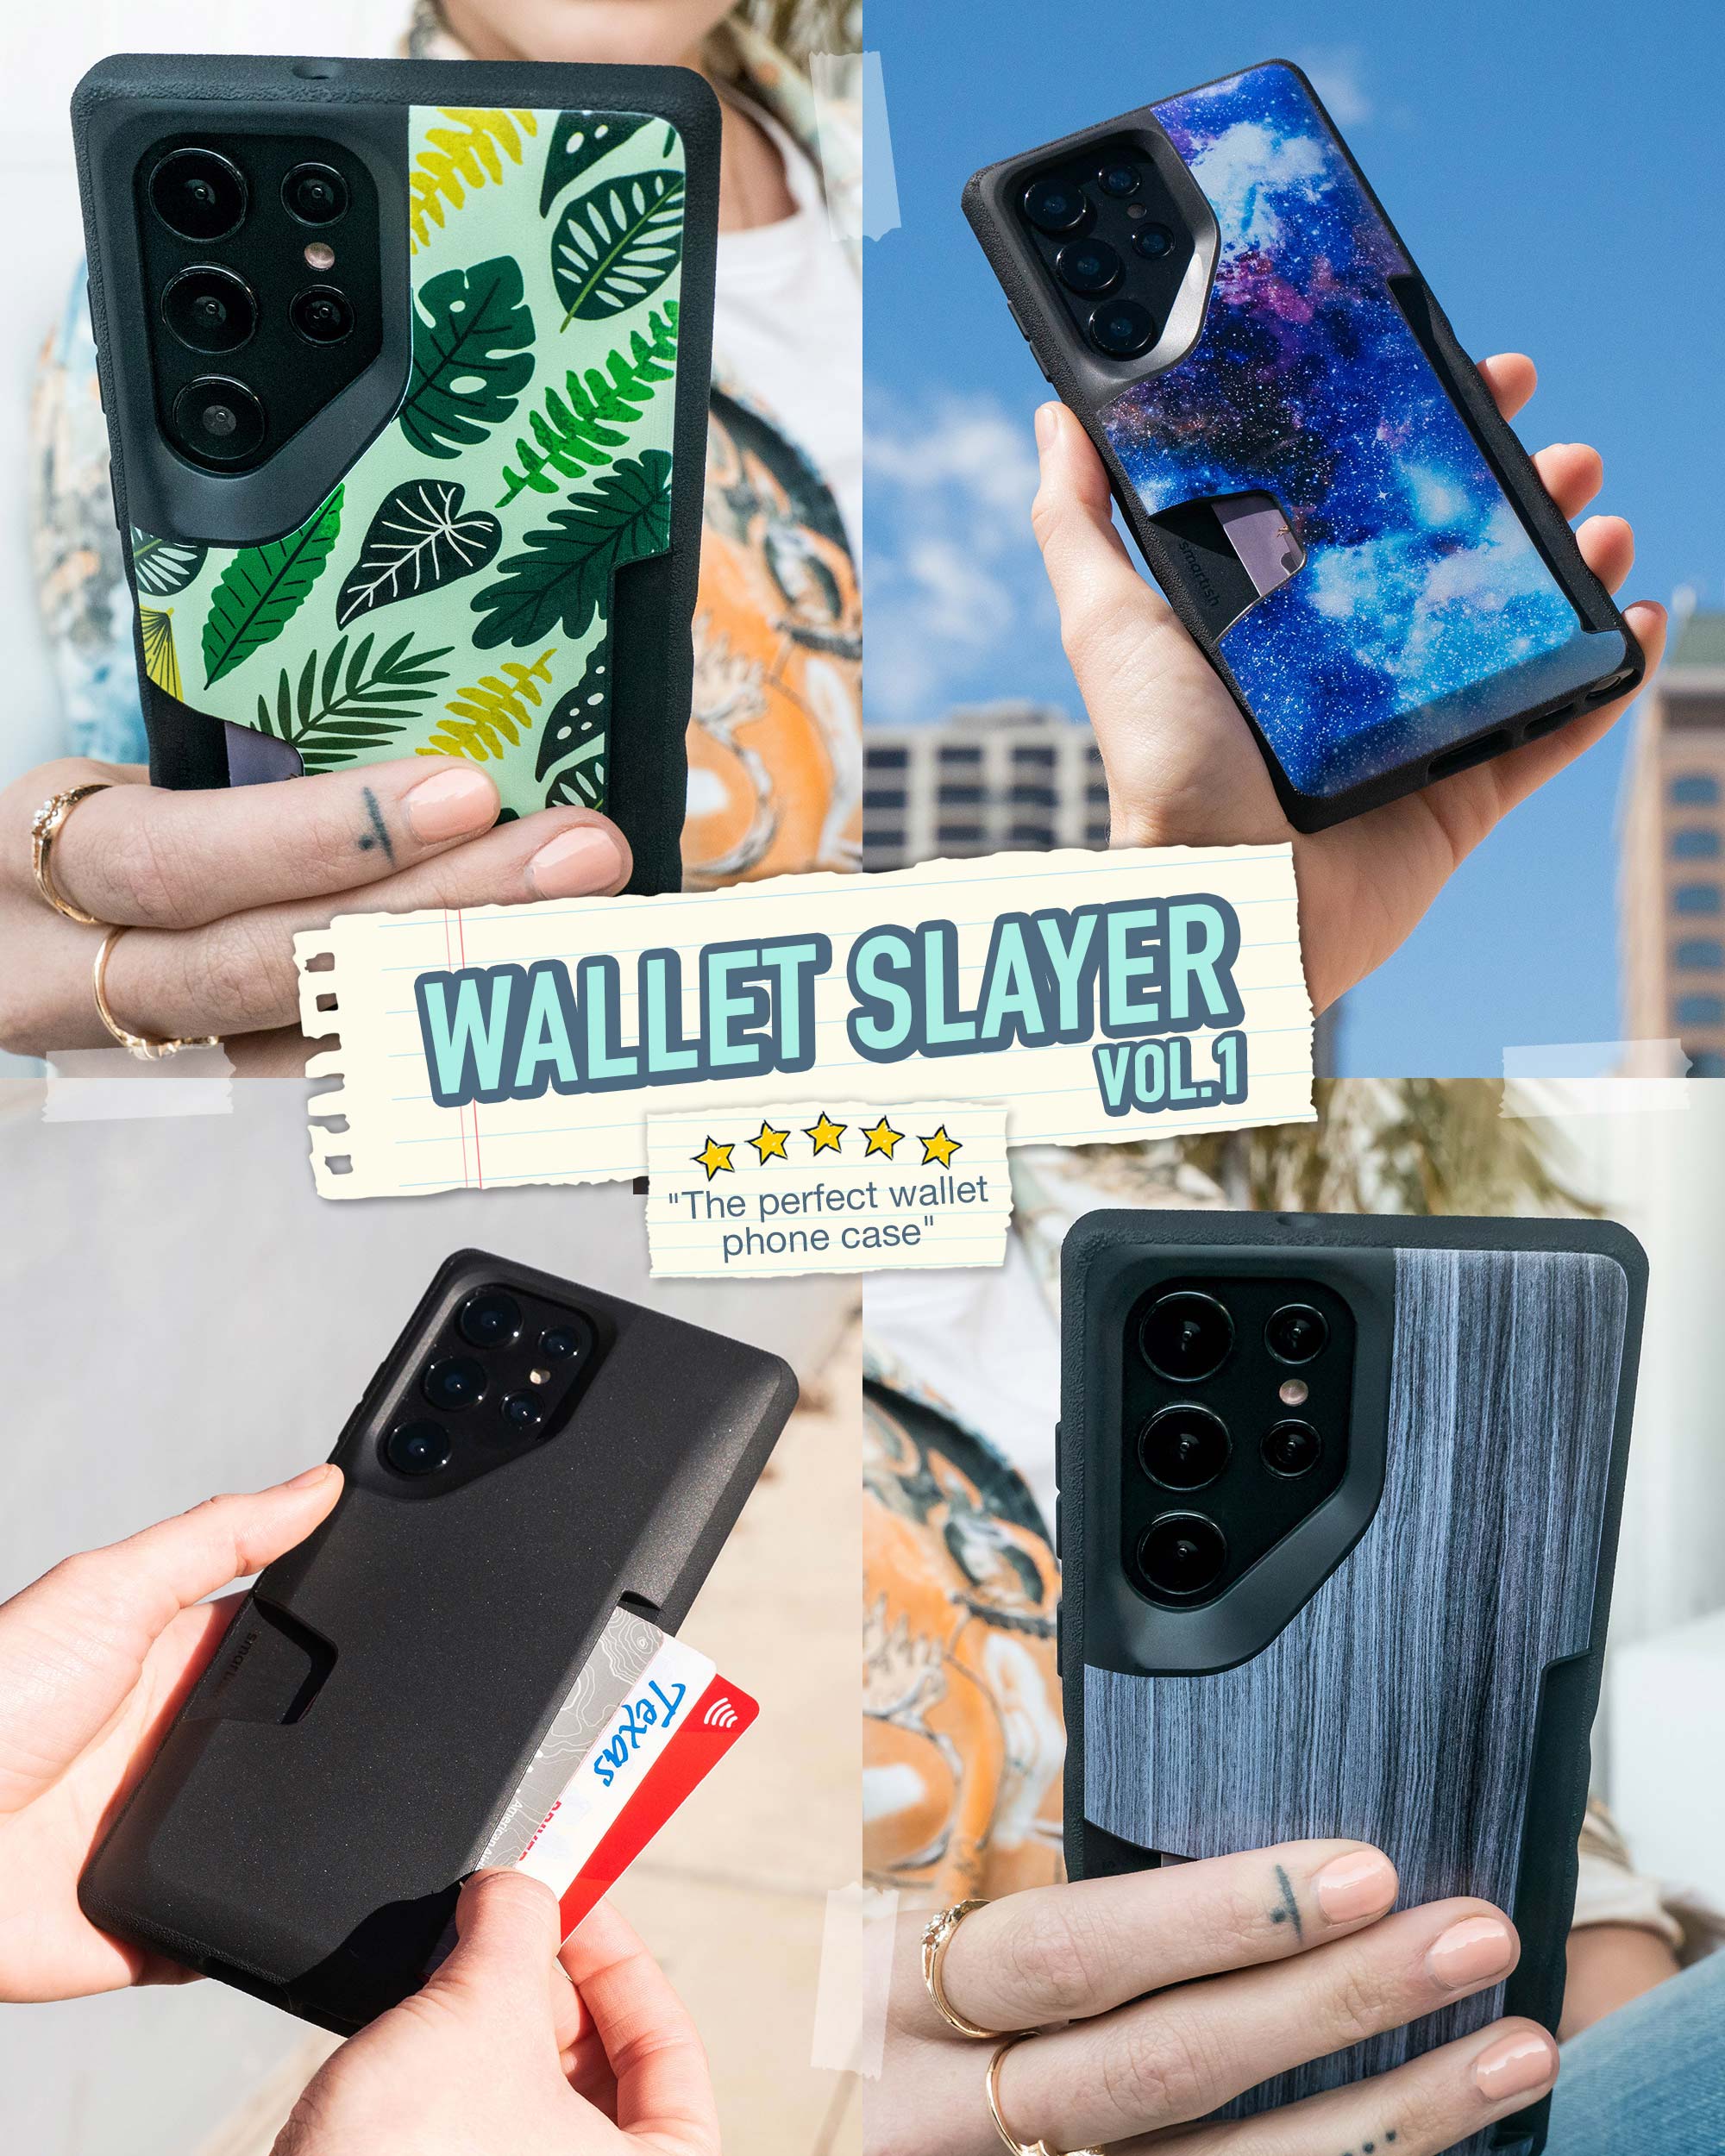  Smartish iPhone 13 Wallet Case - Wallet Slayer Vol. 1